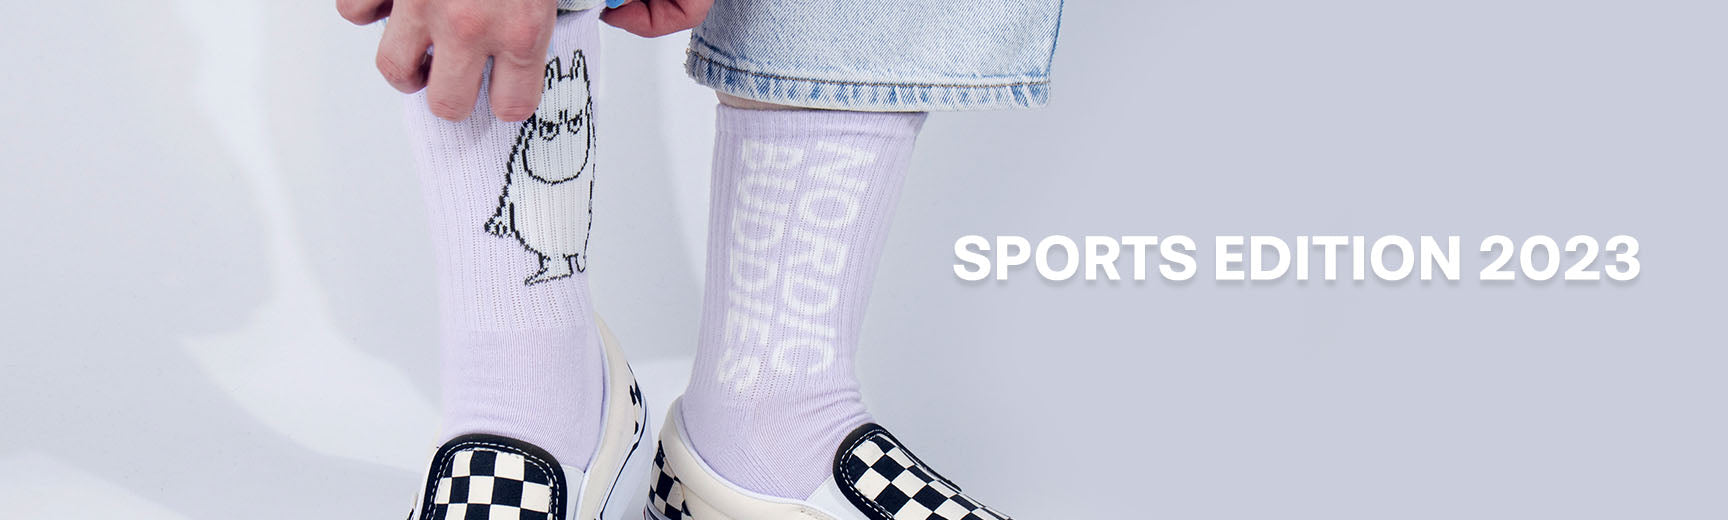 Moomin Sports Edition Socks